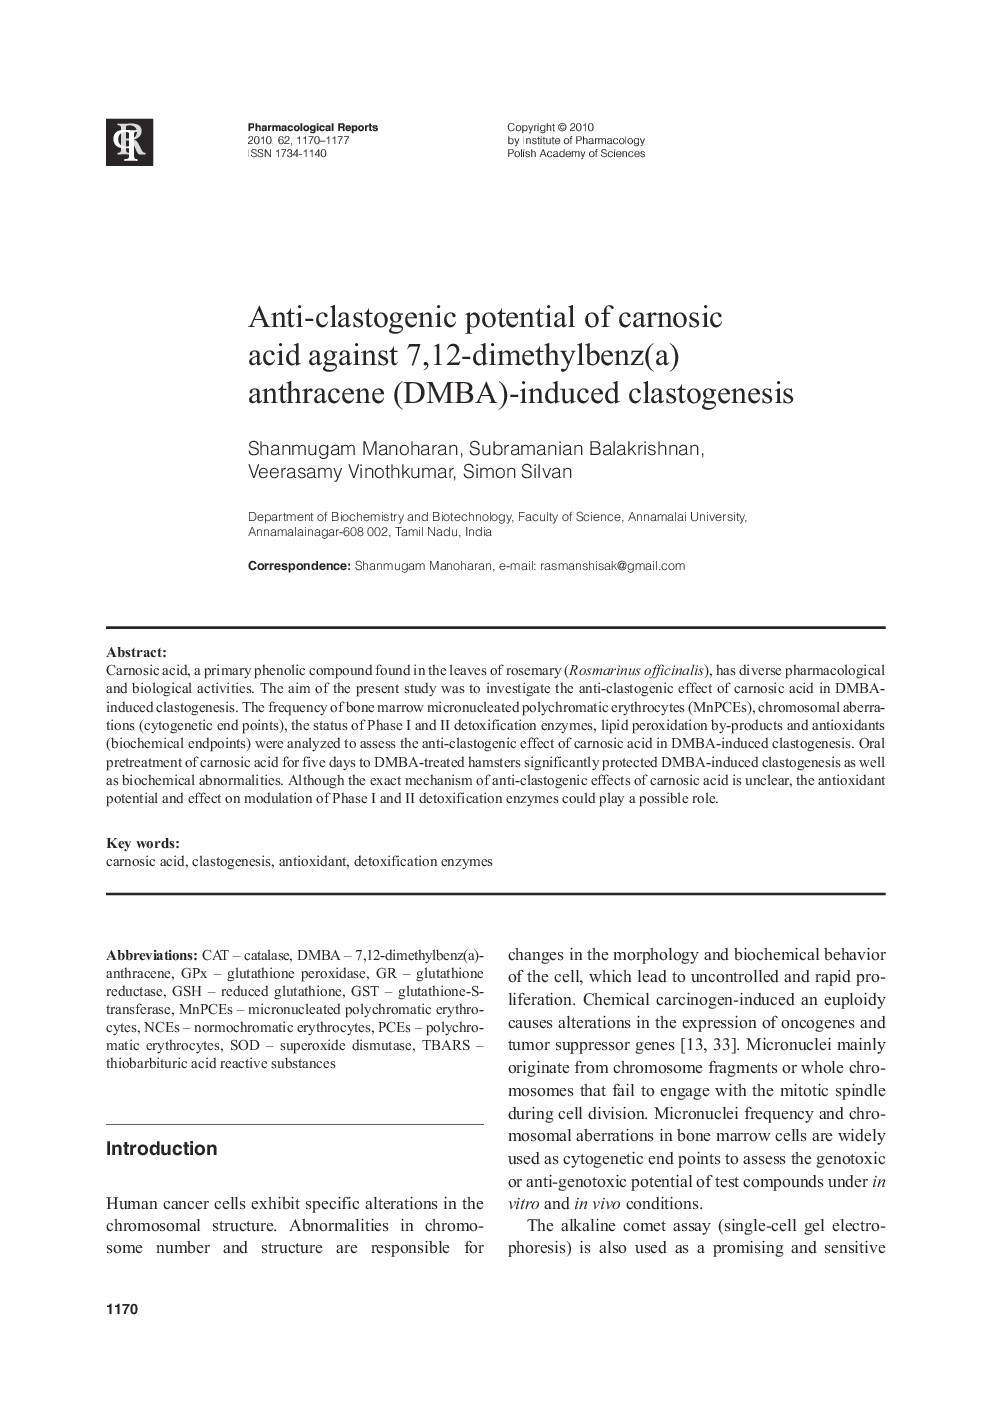 Anti-clastogenic potential of carnosic acid against 7,12-dimethylbenz(a) anthracene (DMBA)-induced clastogenesis